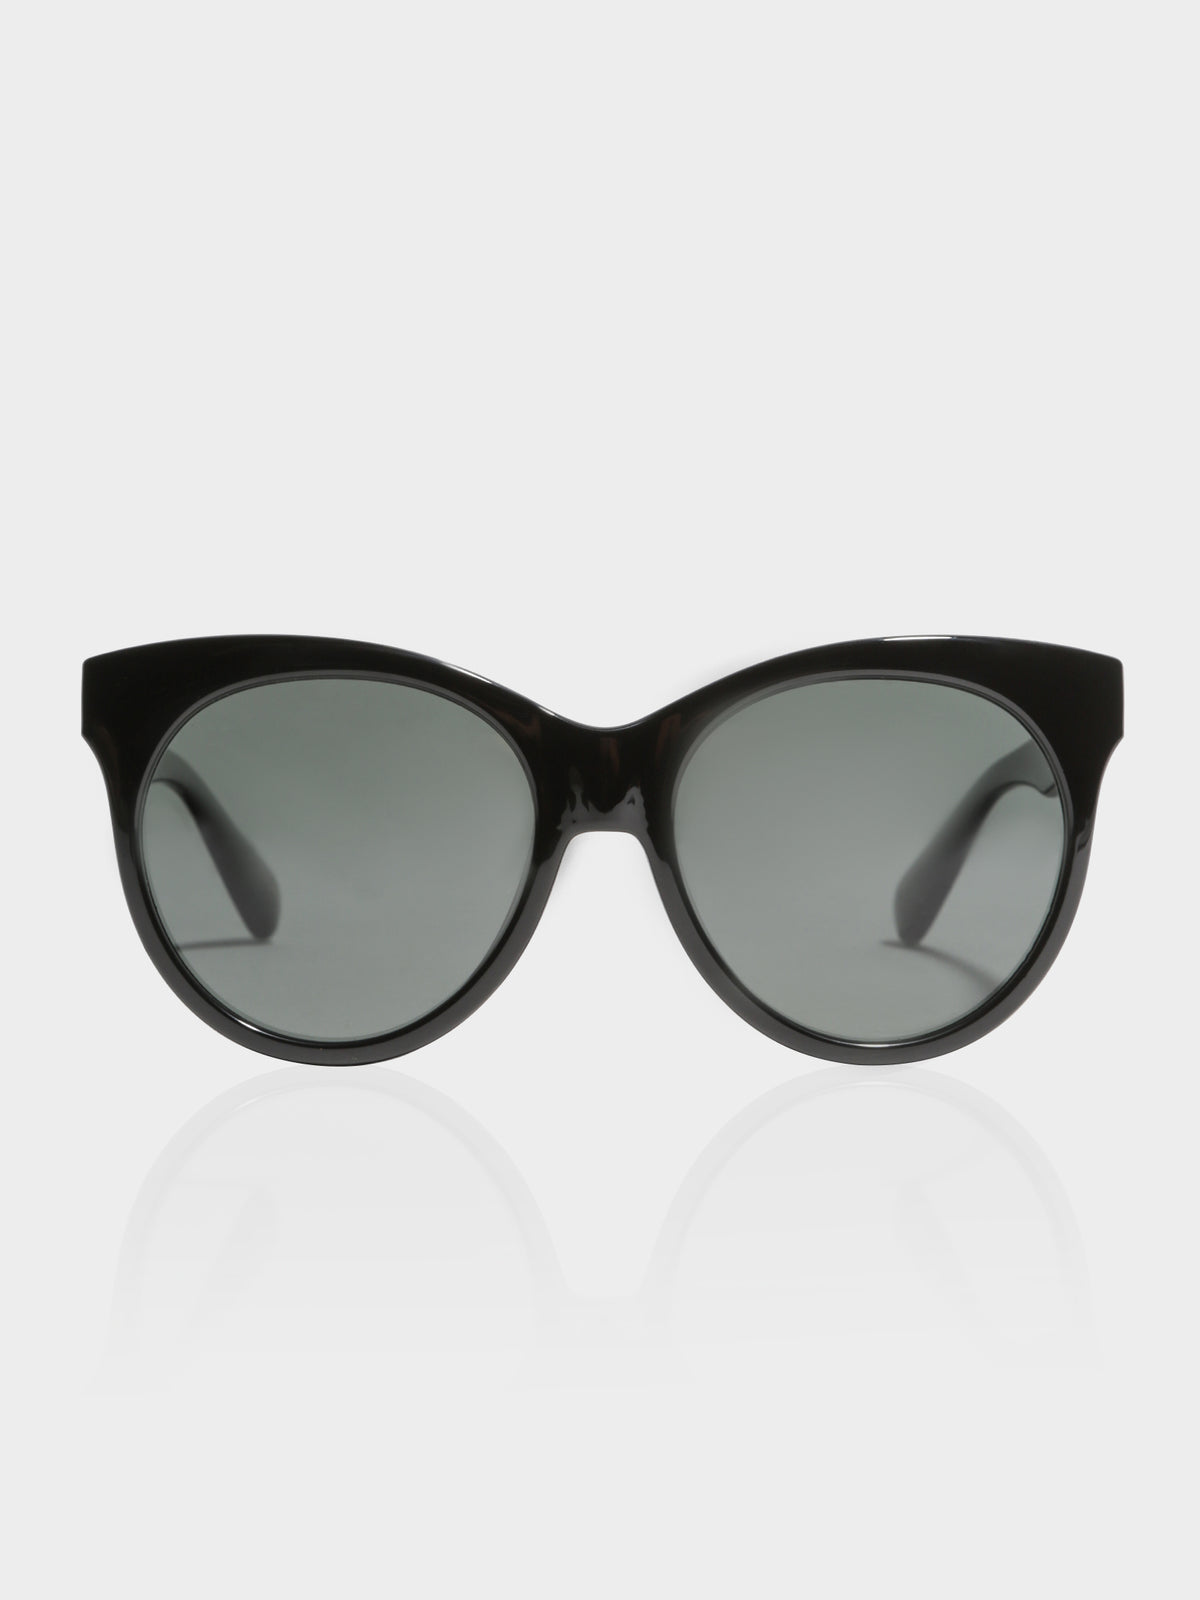 Palace BKG25 Polarised Round Sunglasses in Gloss Black